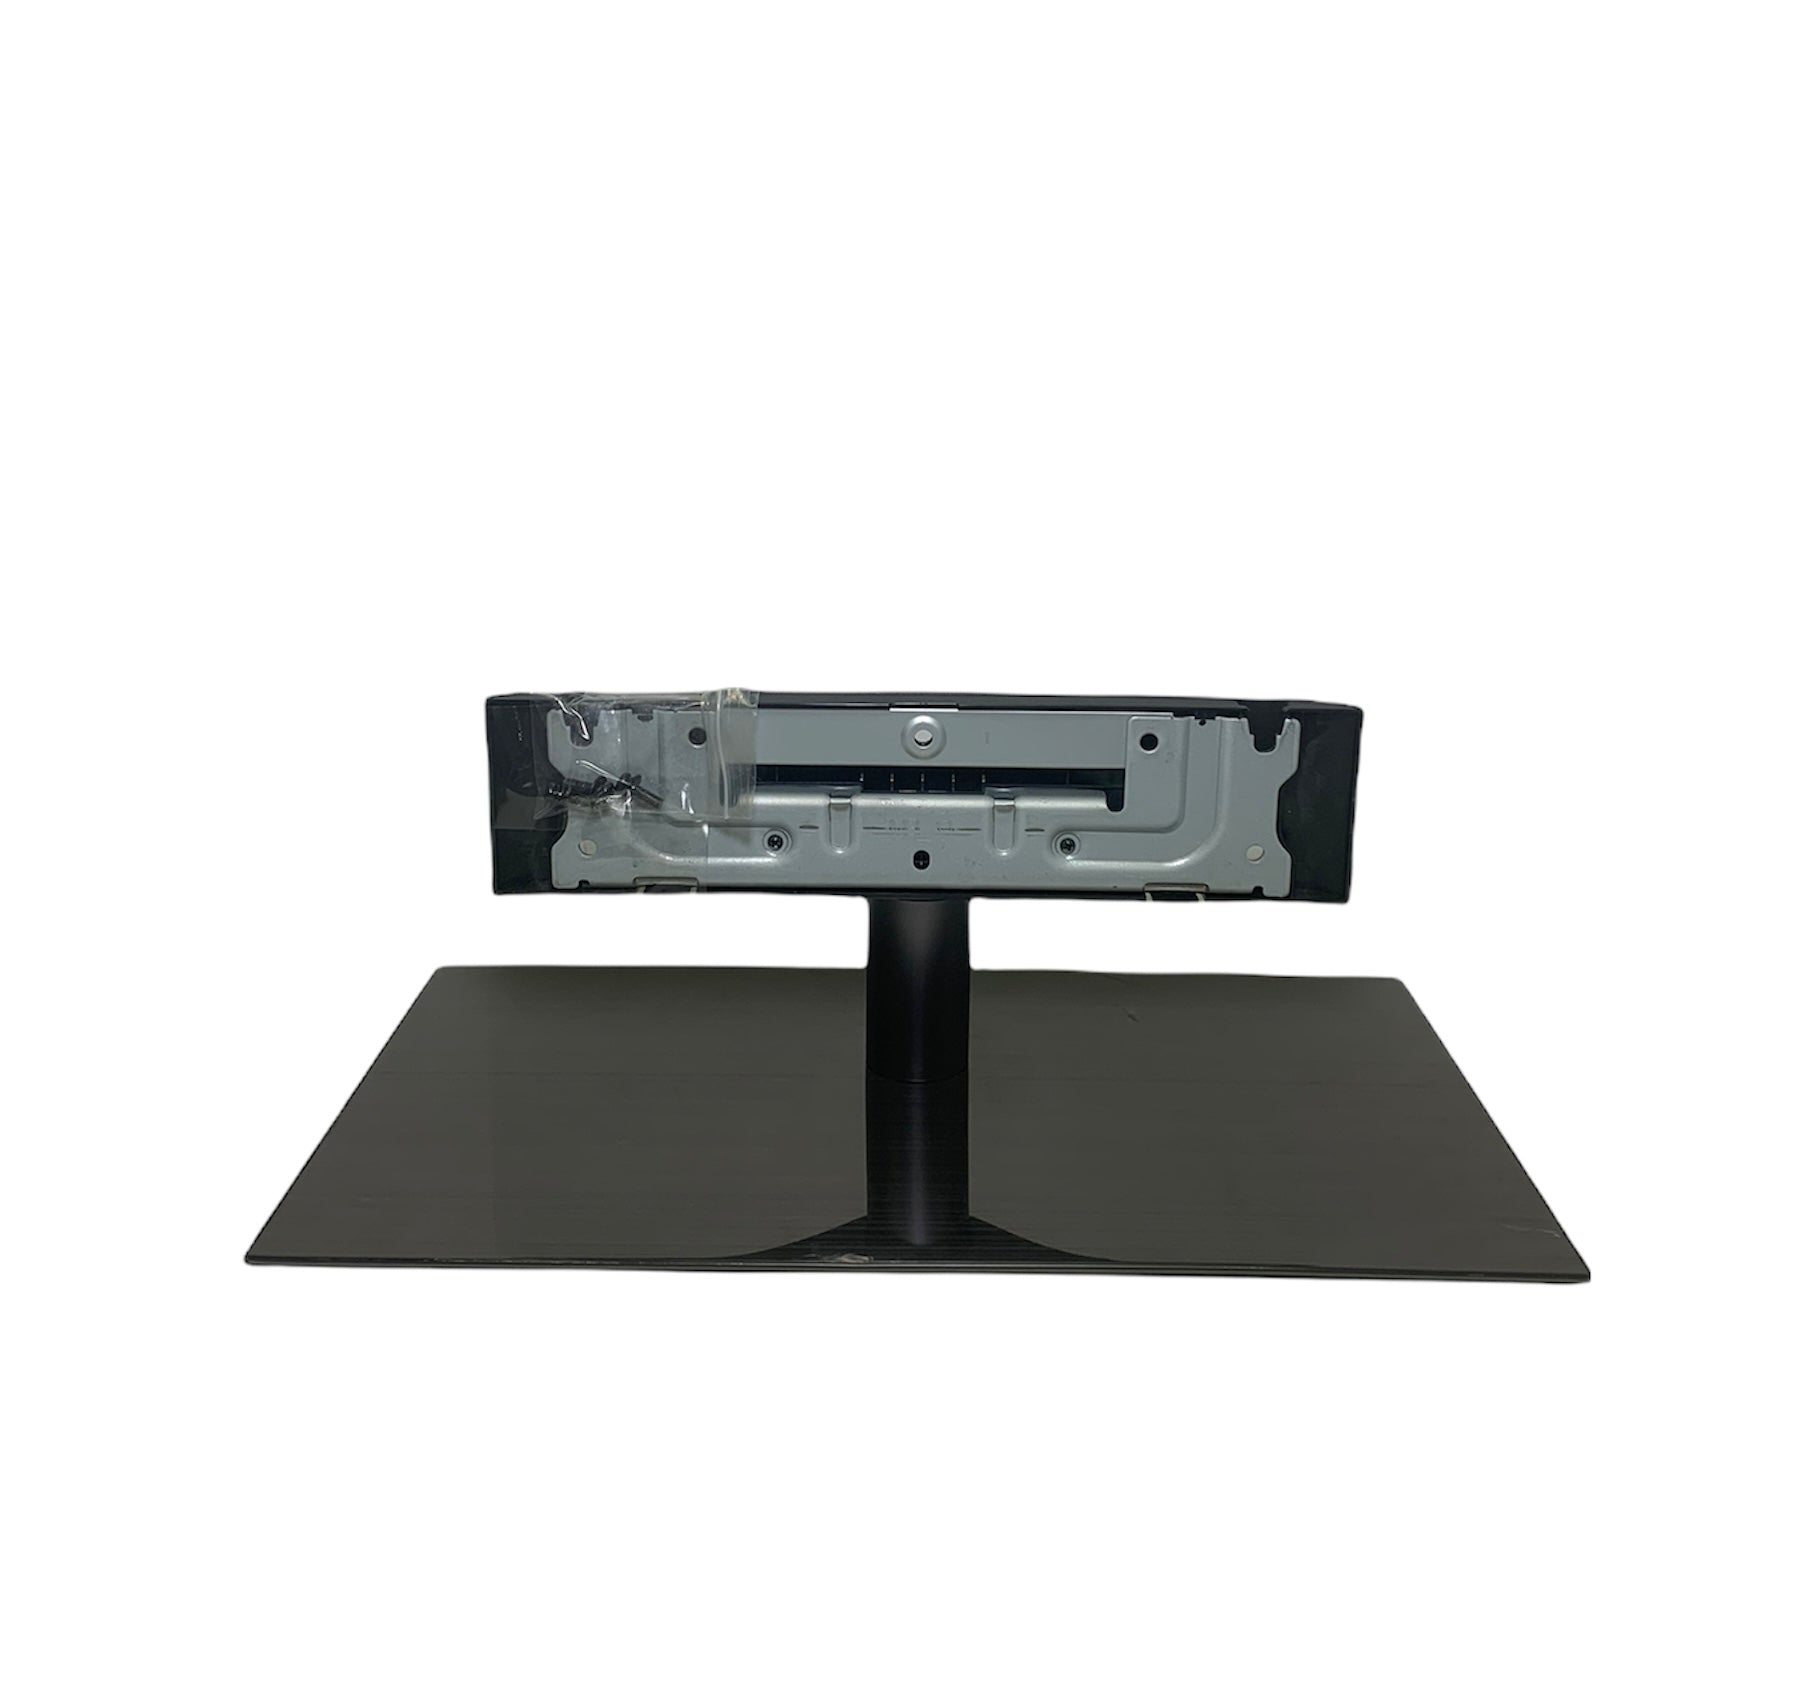 Sony XBR-46HX929 TV Stand/Base